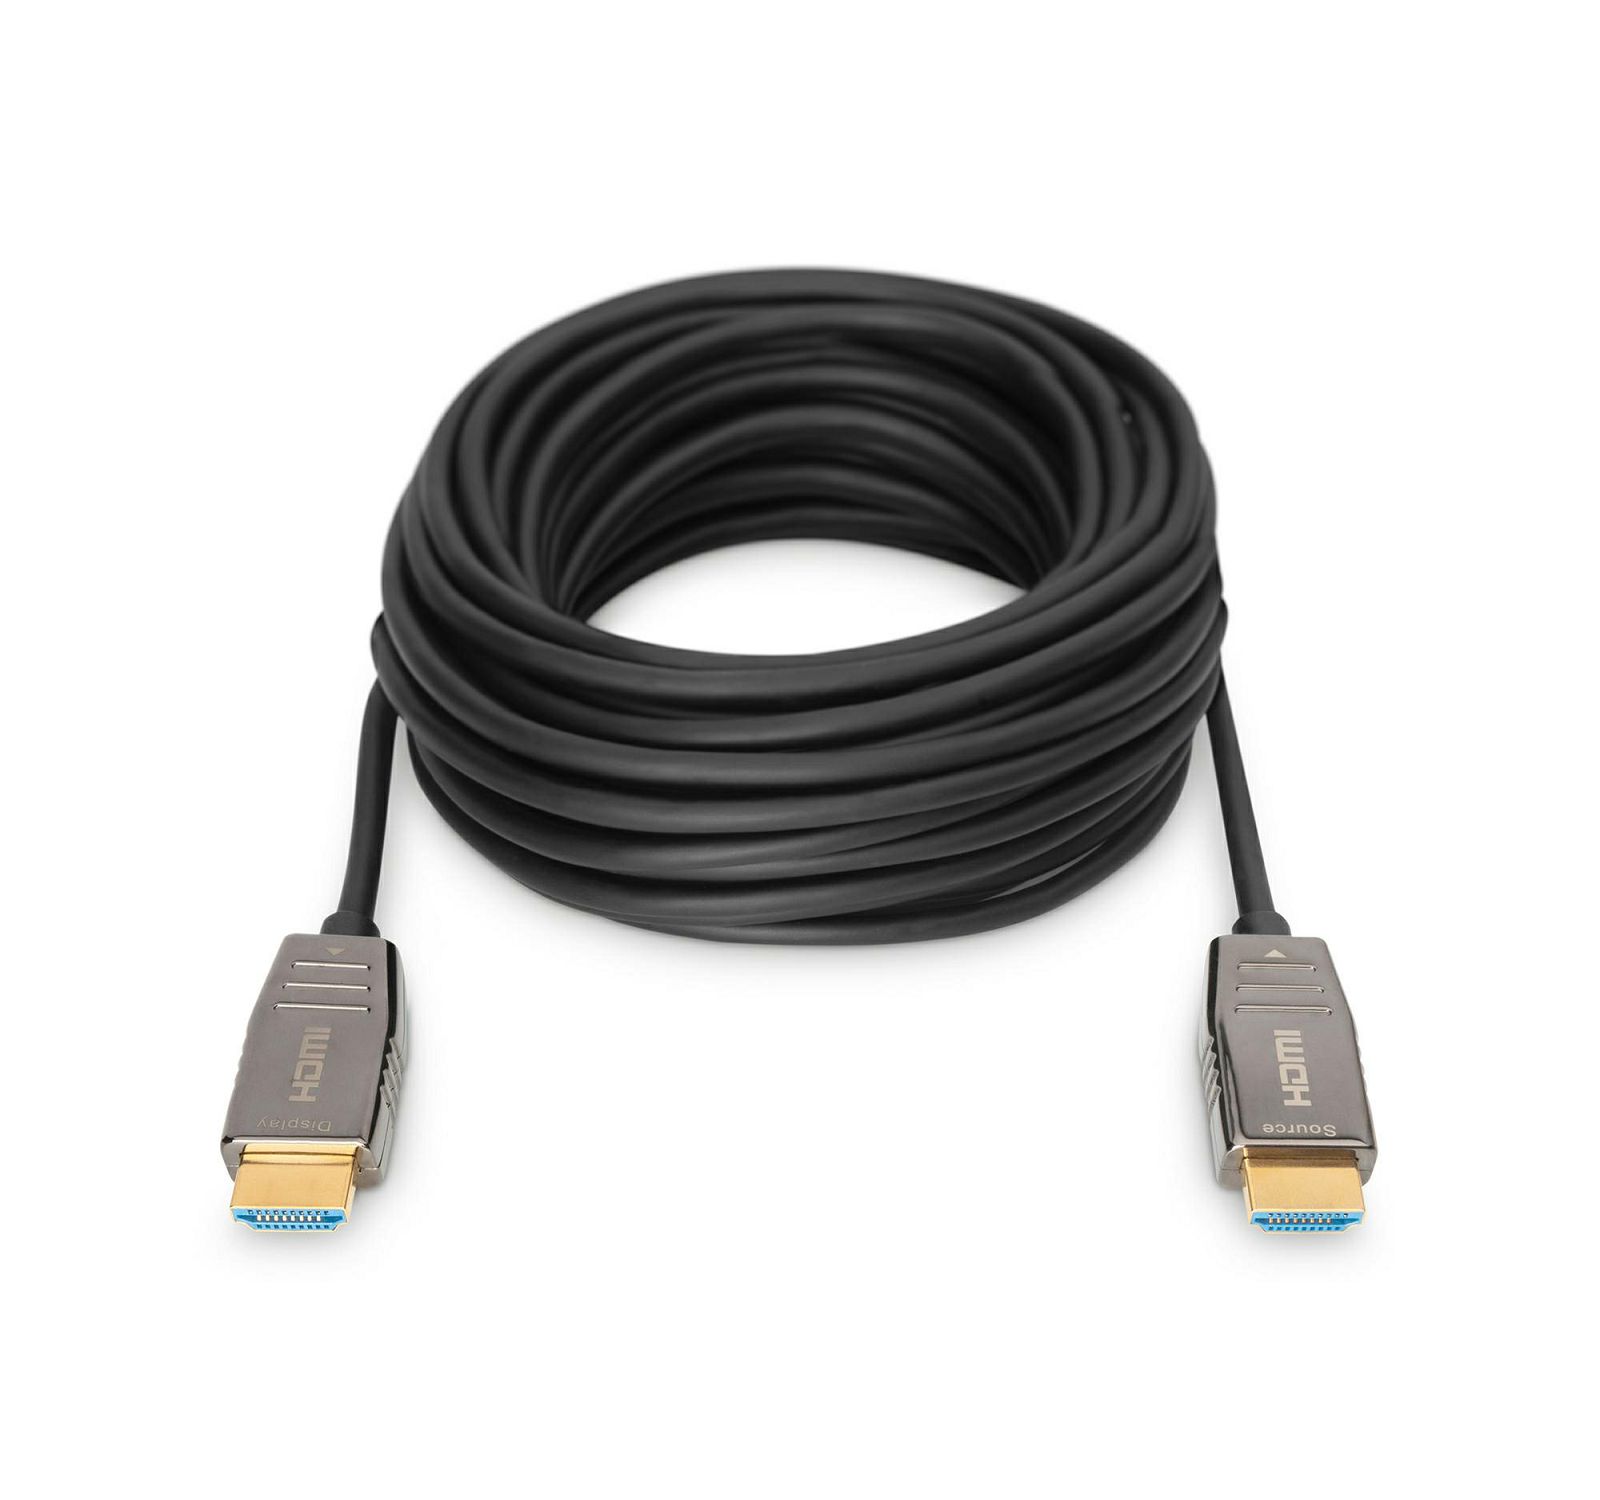 Digitus HDMI AOC Hybrid Fiber Optic Cable UHD 8K 60p kabel 20m